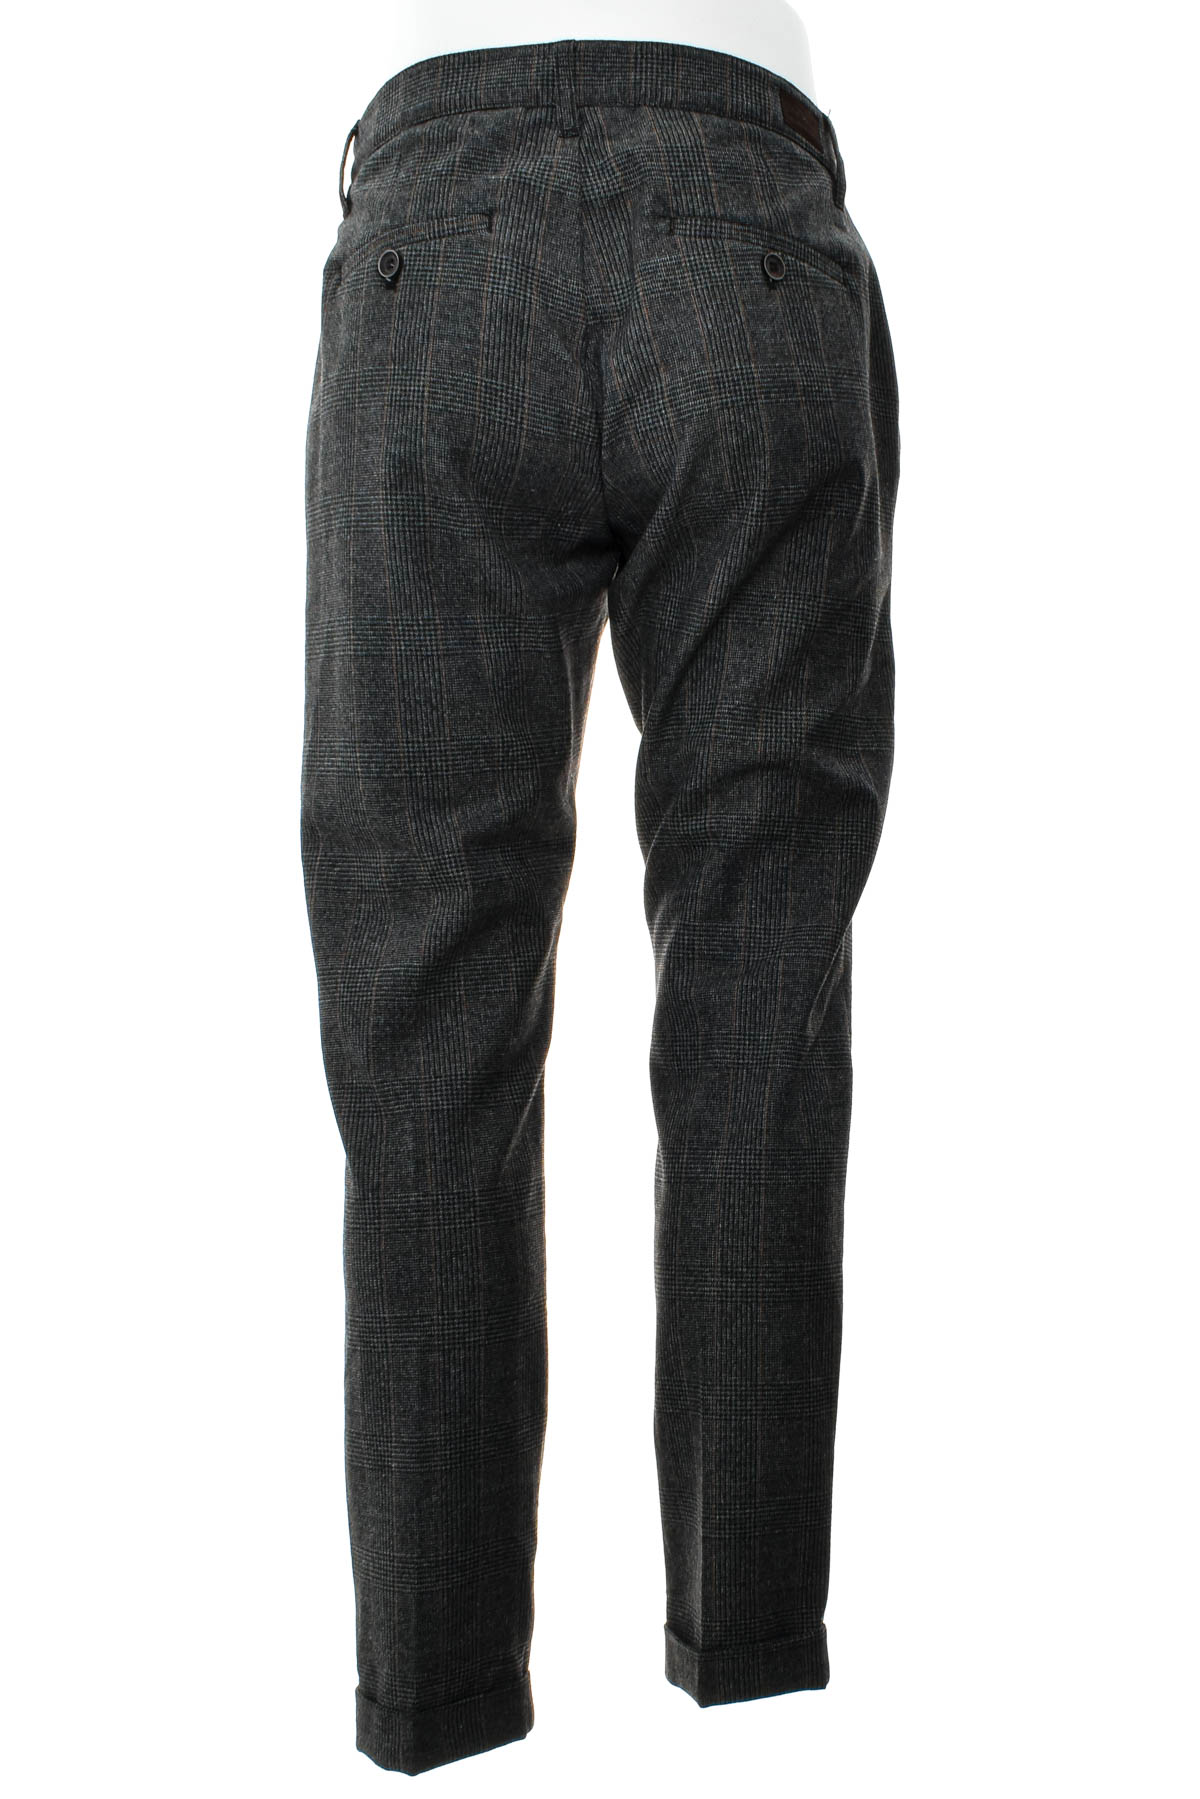 Men's trousers - Freeman T. Porter - 1